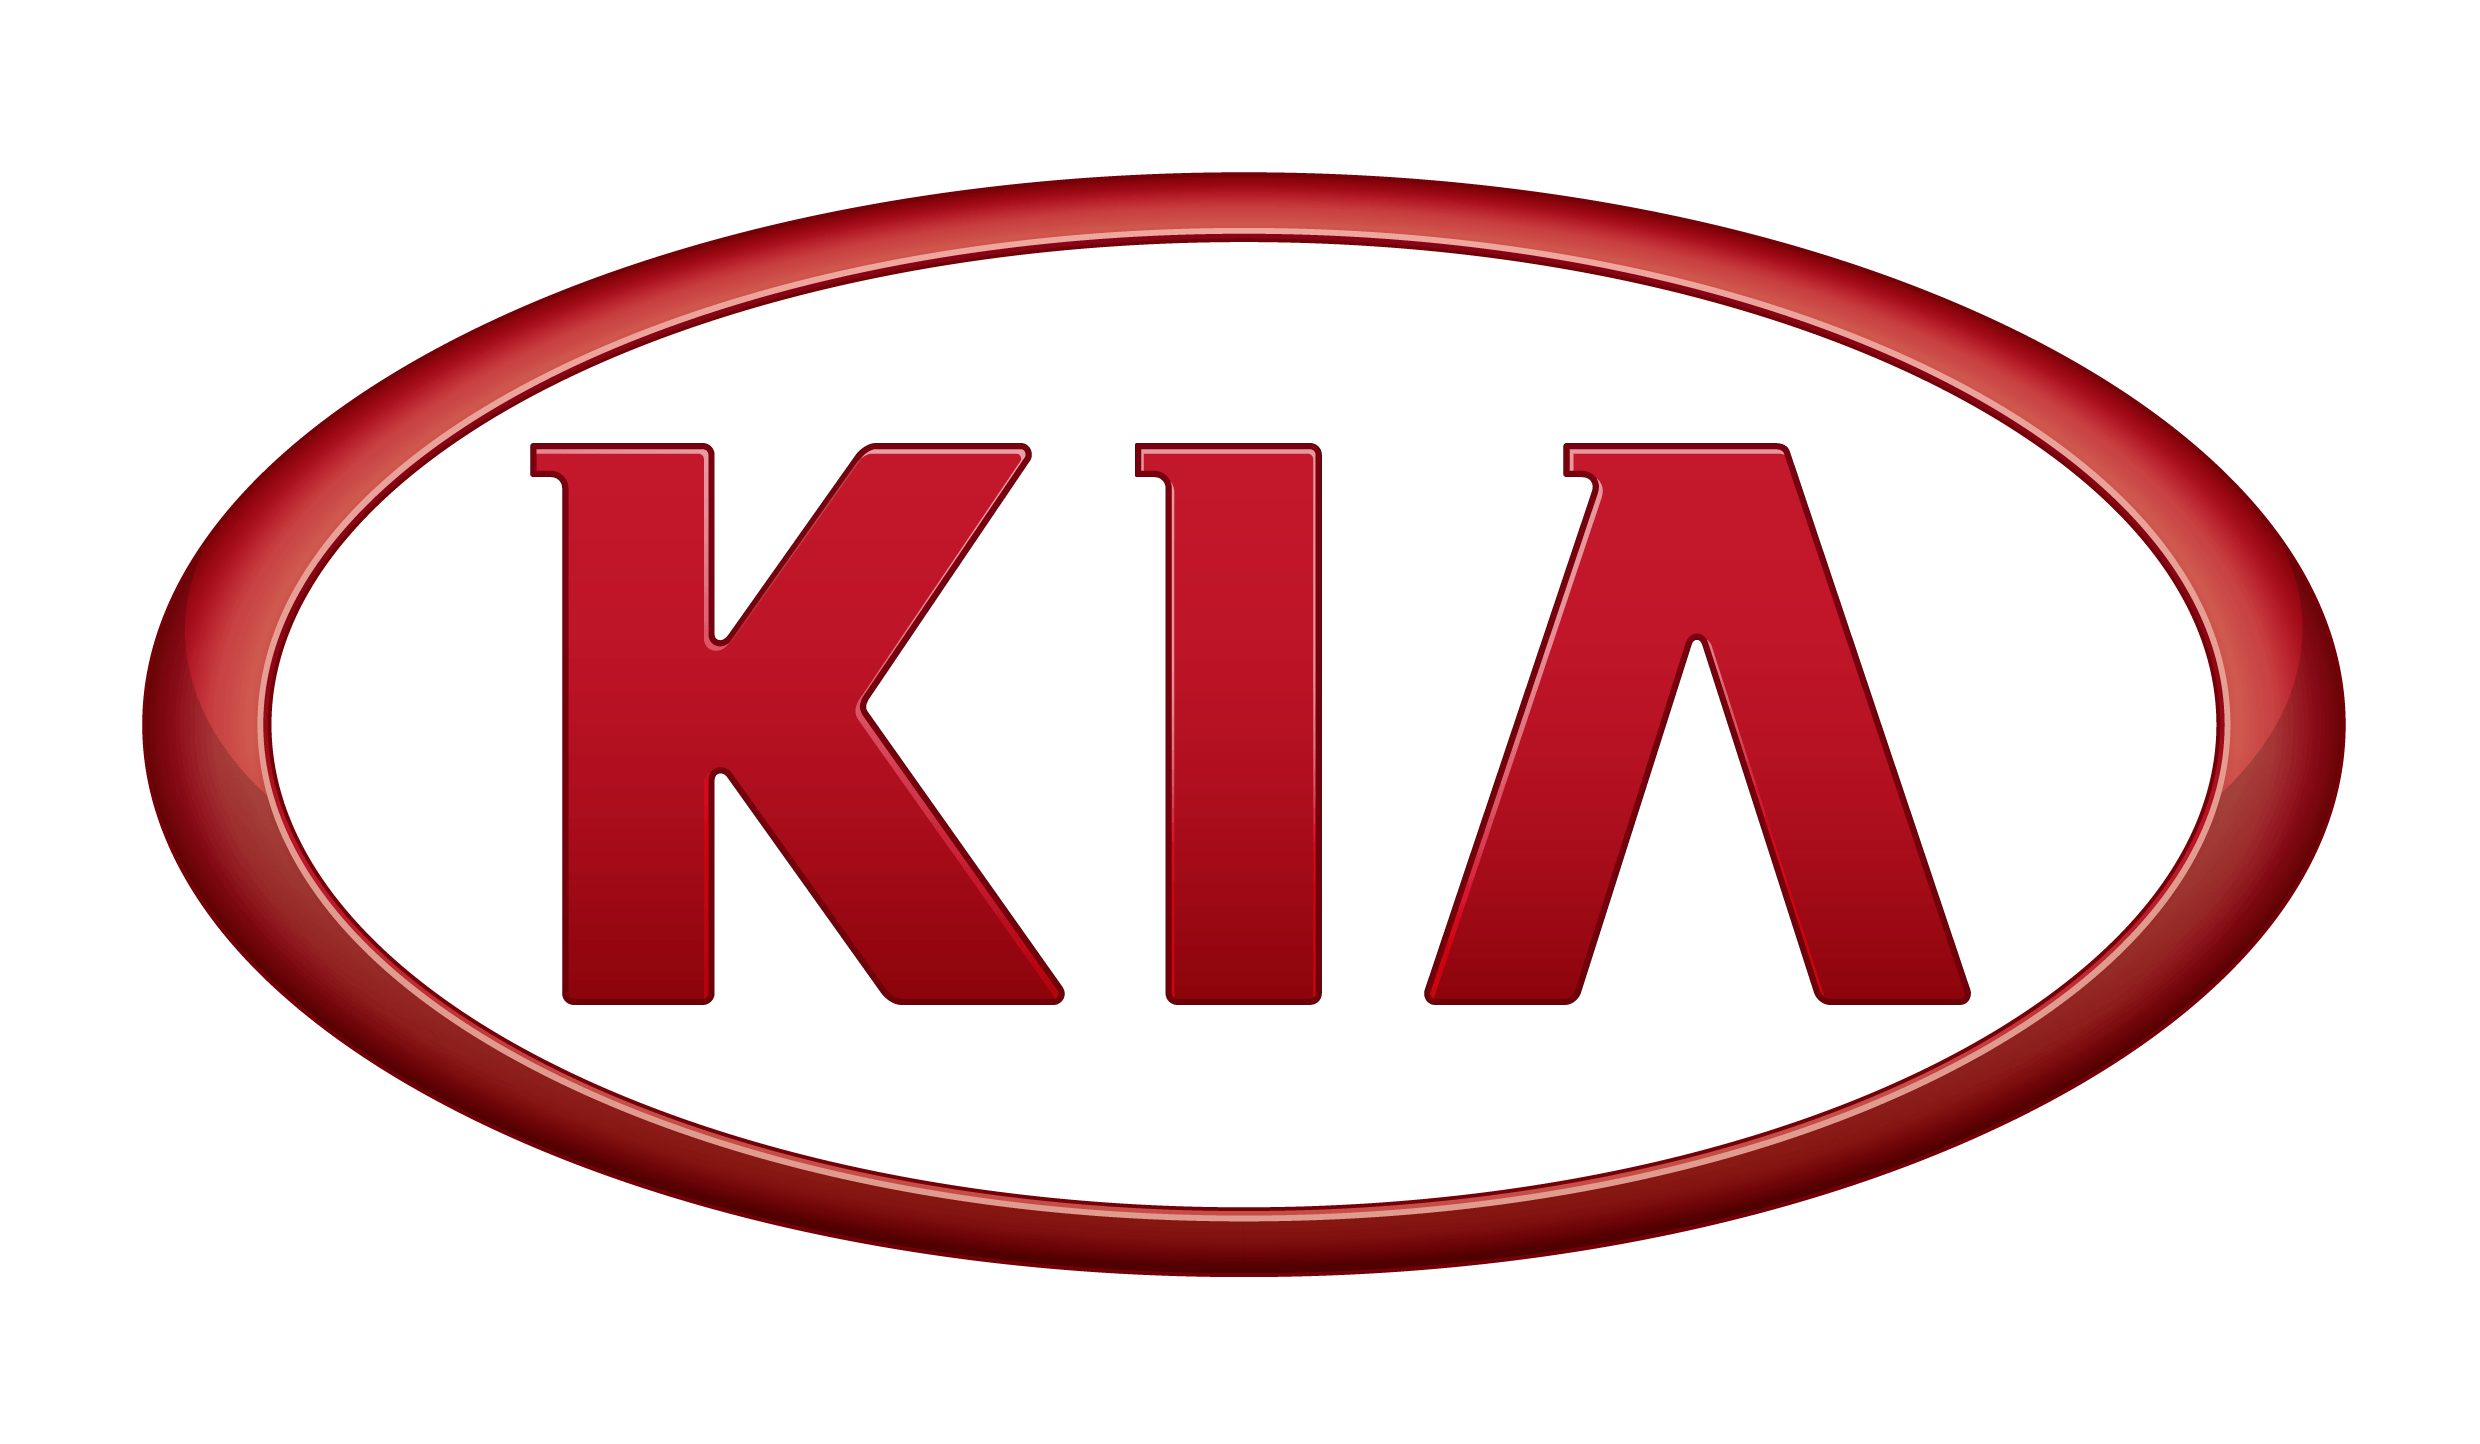 Red Symbol Logo - Kia Logo, Kia Car Symbol Meaning and History | Car Brand Names.com